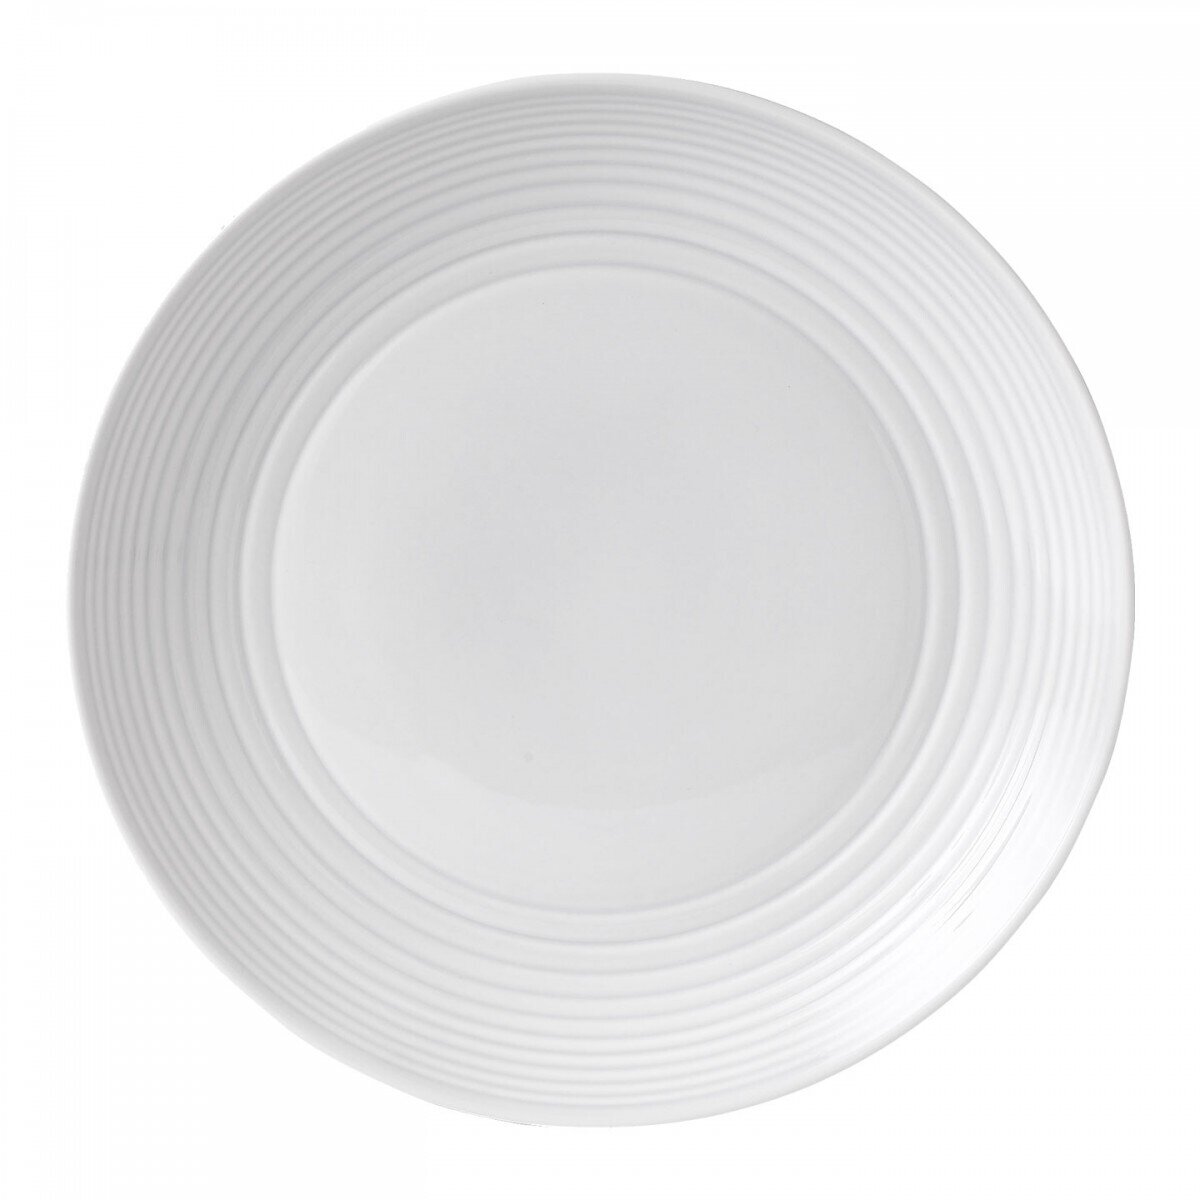 Royal Doulton Maze White Dinner Plate 11 Inch